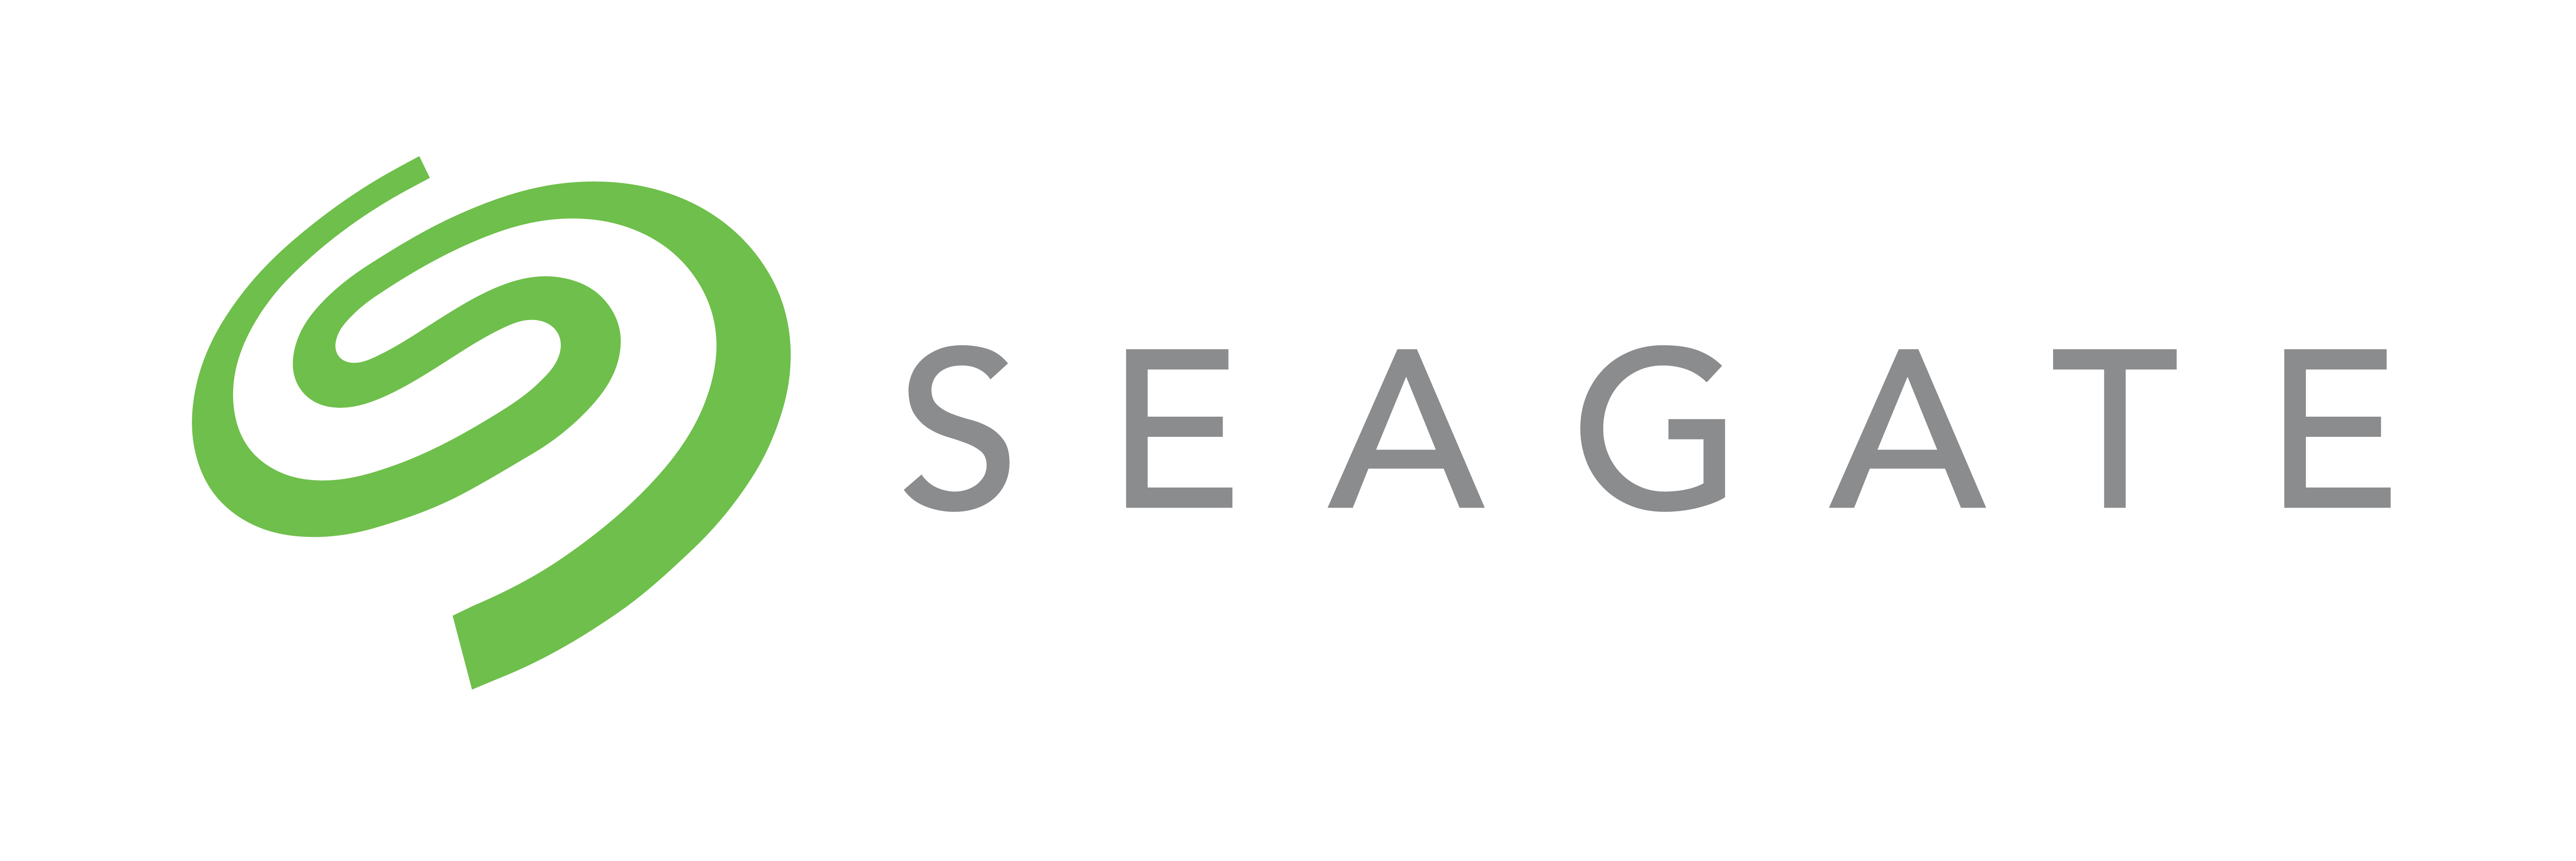 Seagate Technology Brand Logo